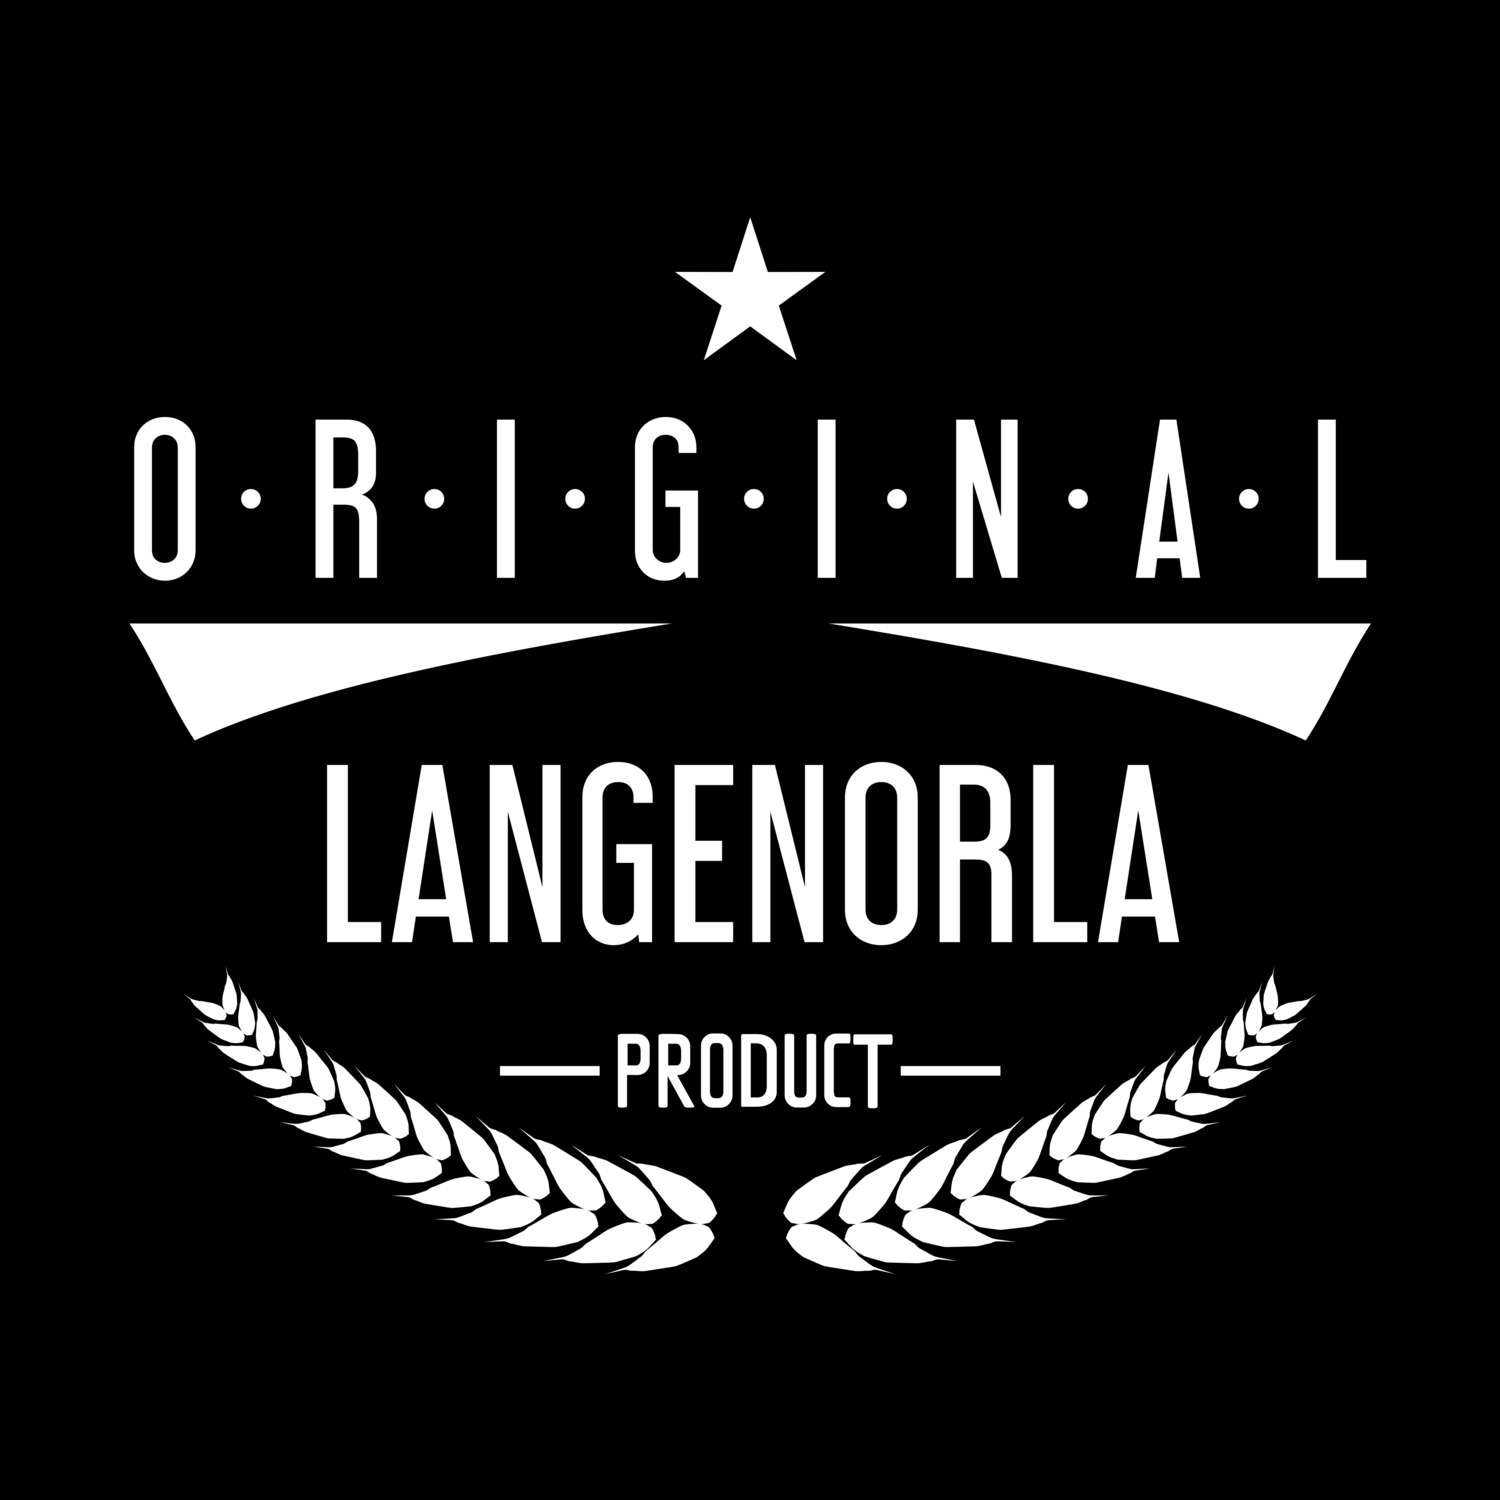 Langenorla T-Shirt »Original Product«